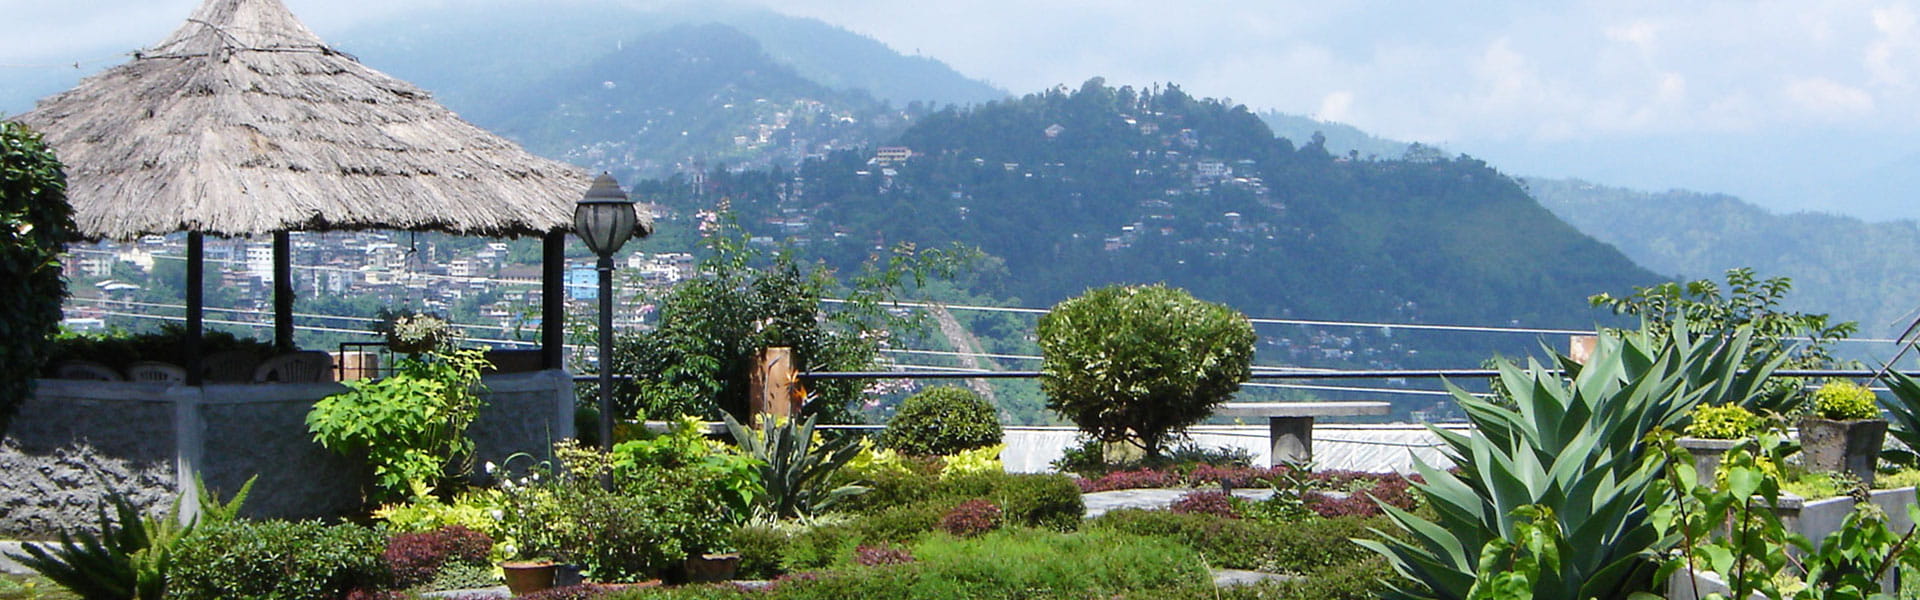 Sightseeing in Kalimpong